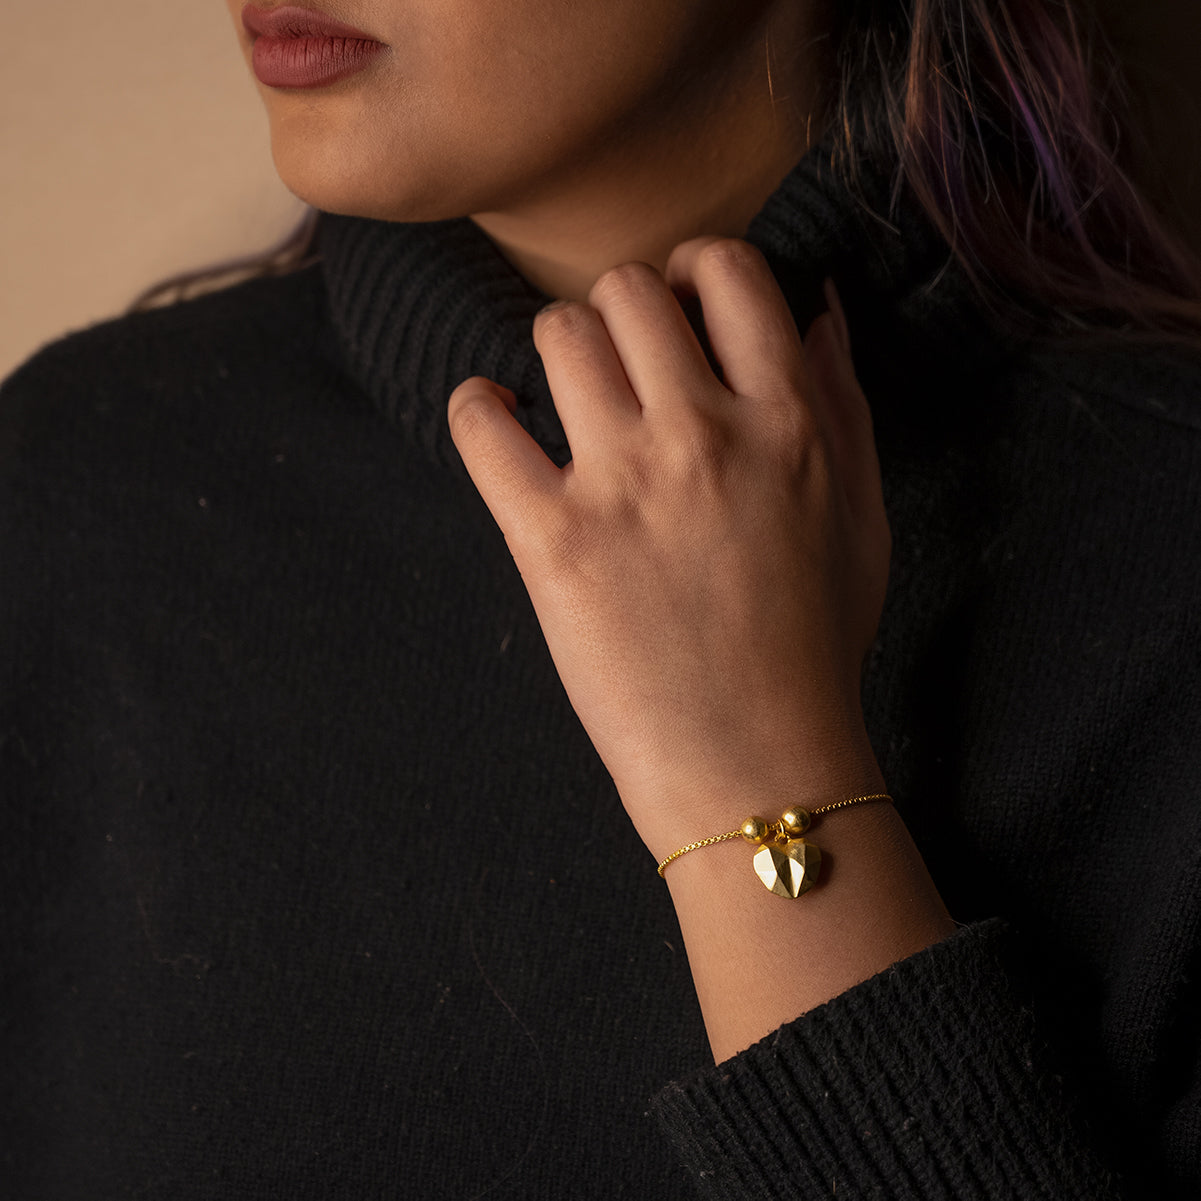 Noor Bracelet| 24k Gold Plated | Handmade | Made in India – Ethnic Andaz